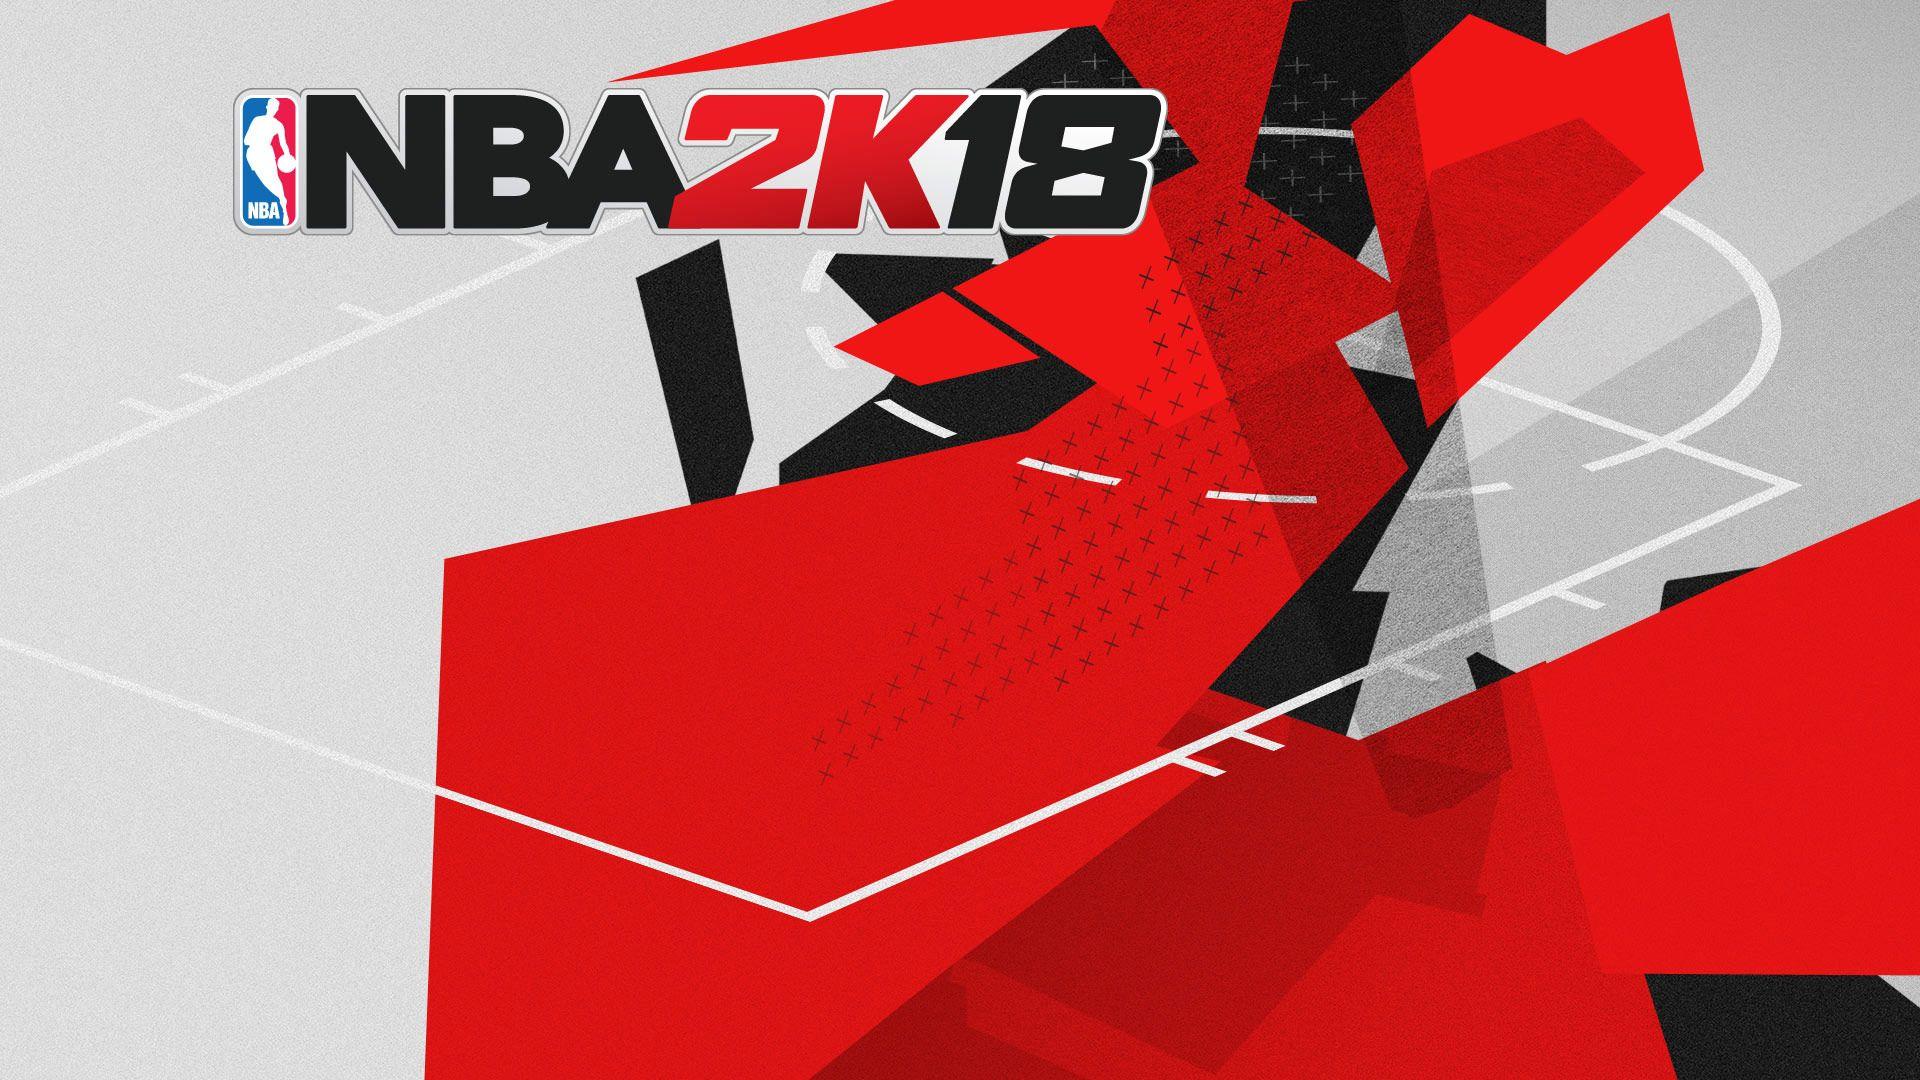 NBA 2K18 Game Picture. Beautiful image HD Picture & Desktop